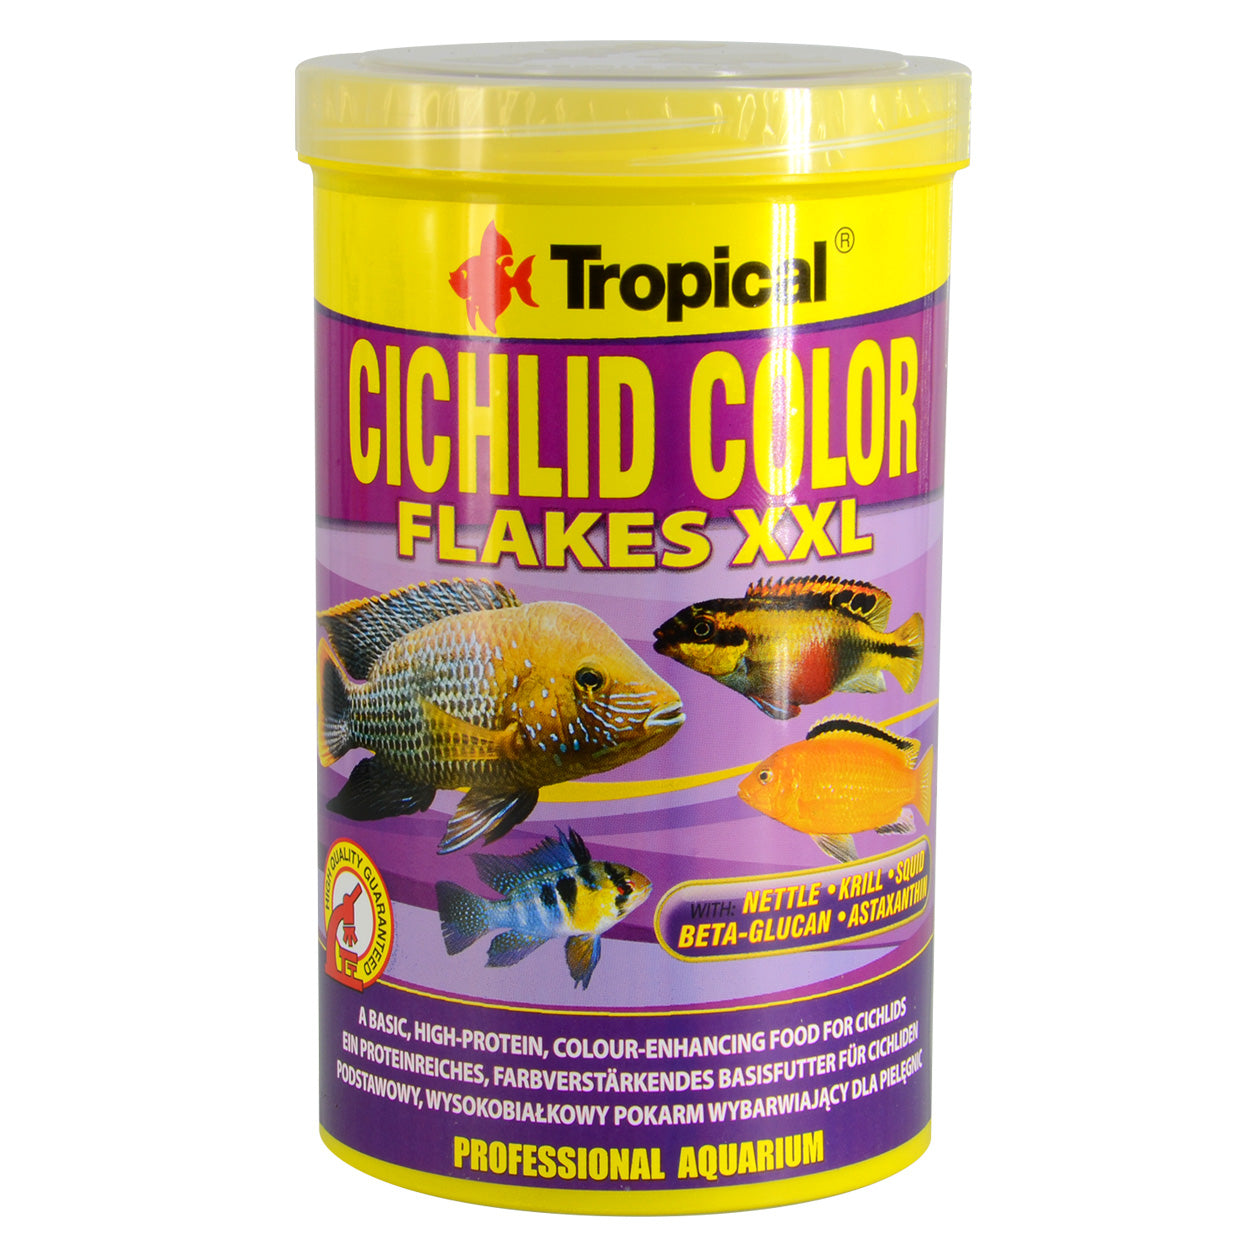 Cichlid Color Flakes